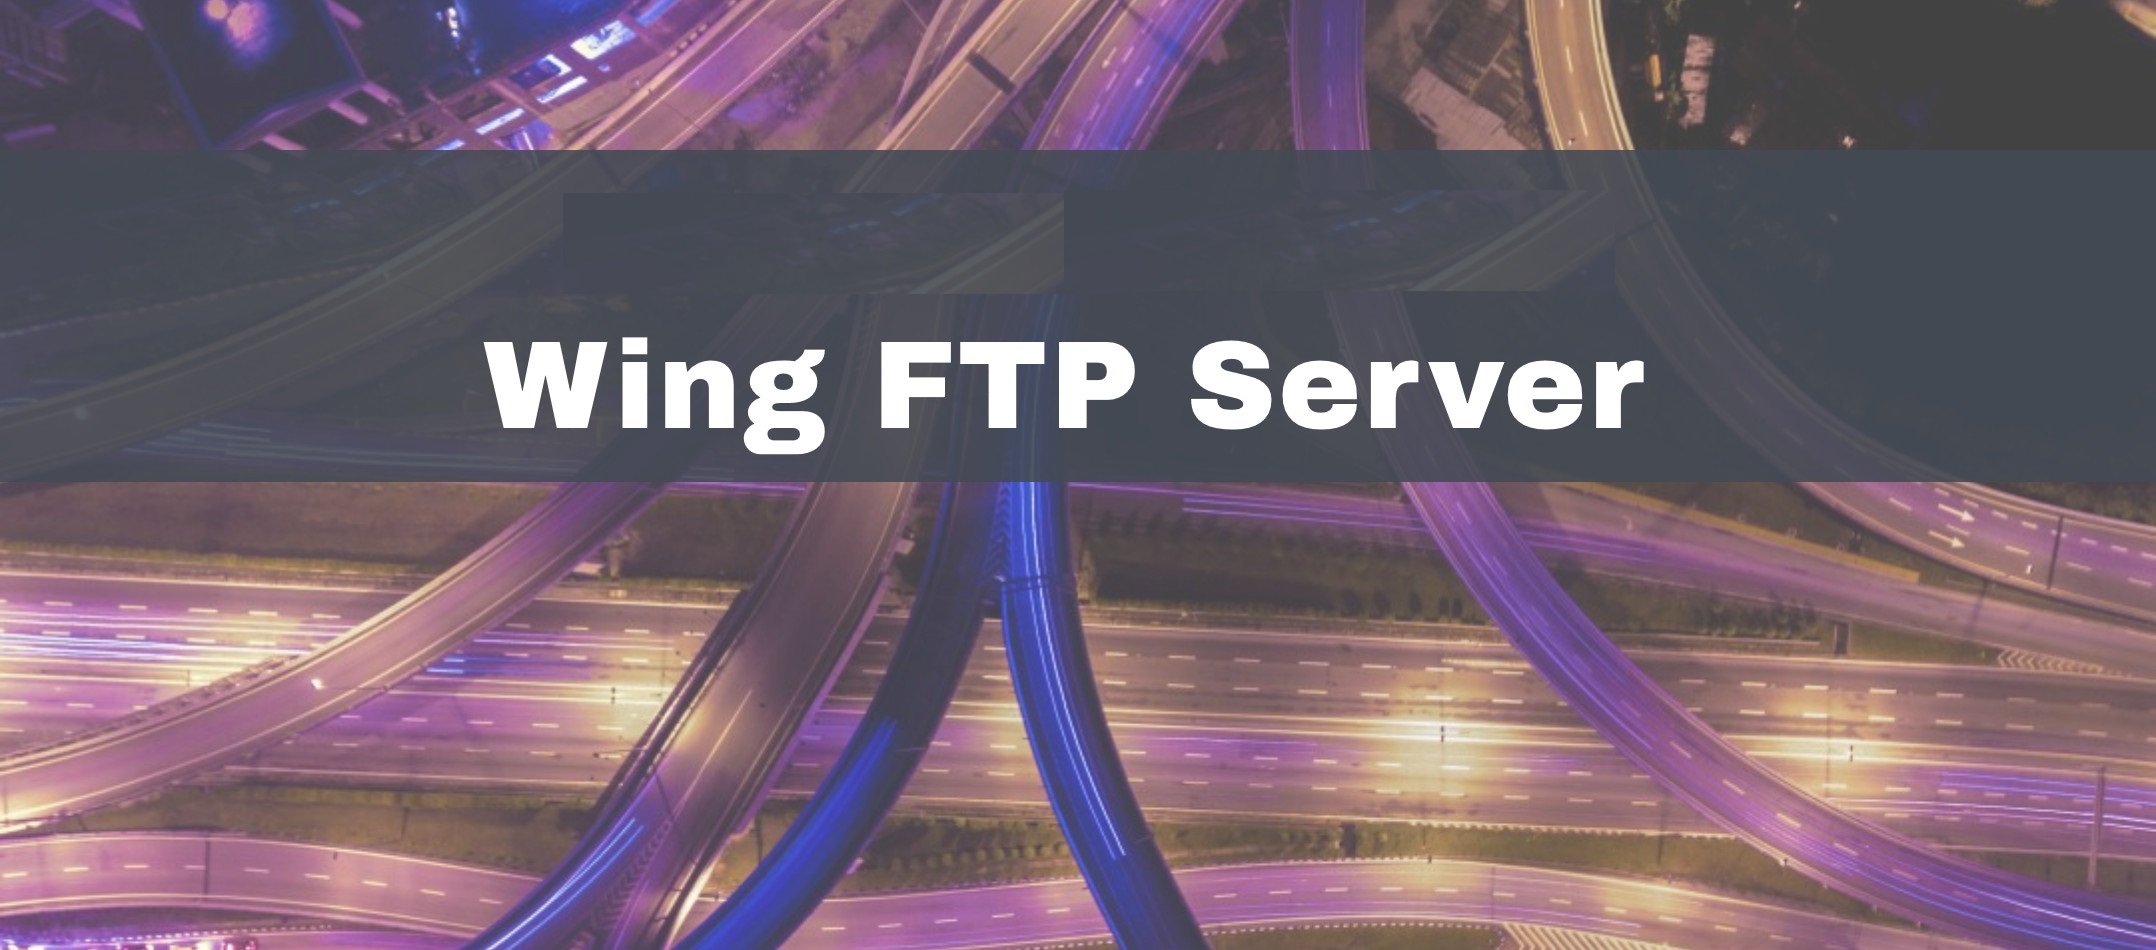 Wing FTP Server center